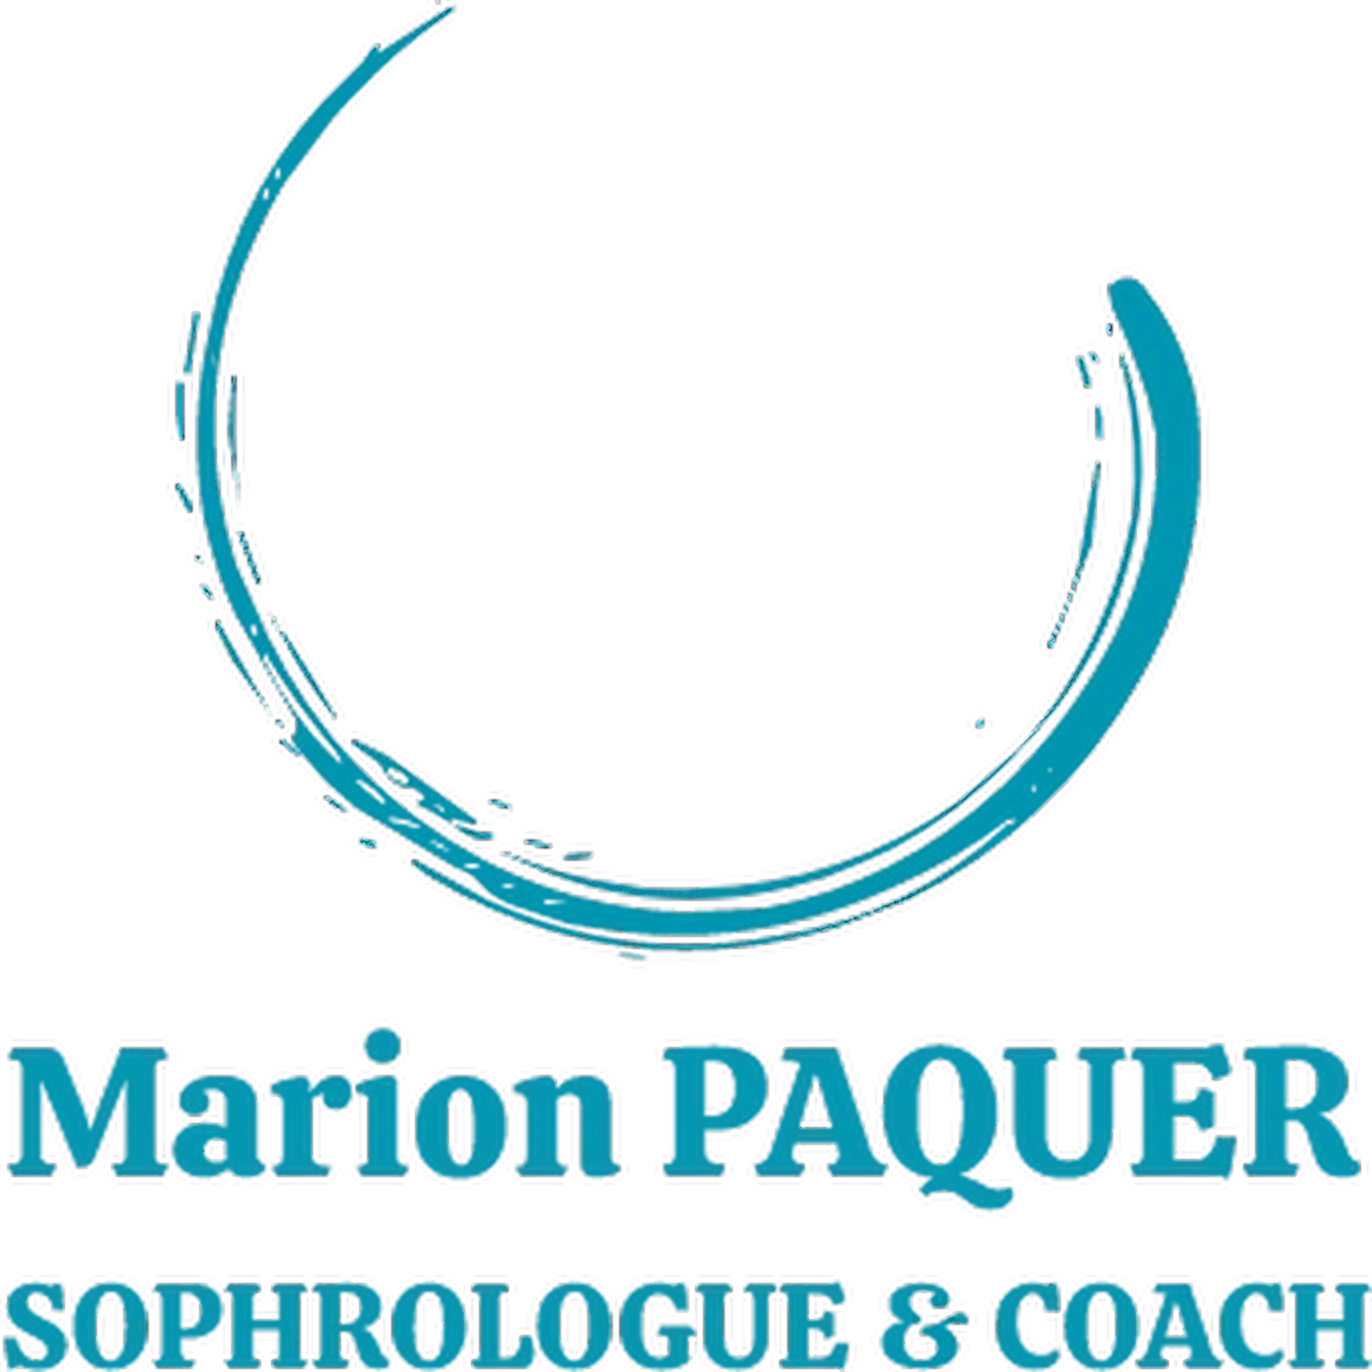 Marion Paquer - Sophrologue